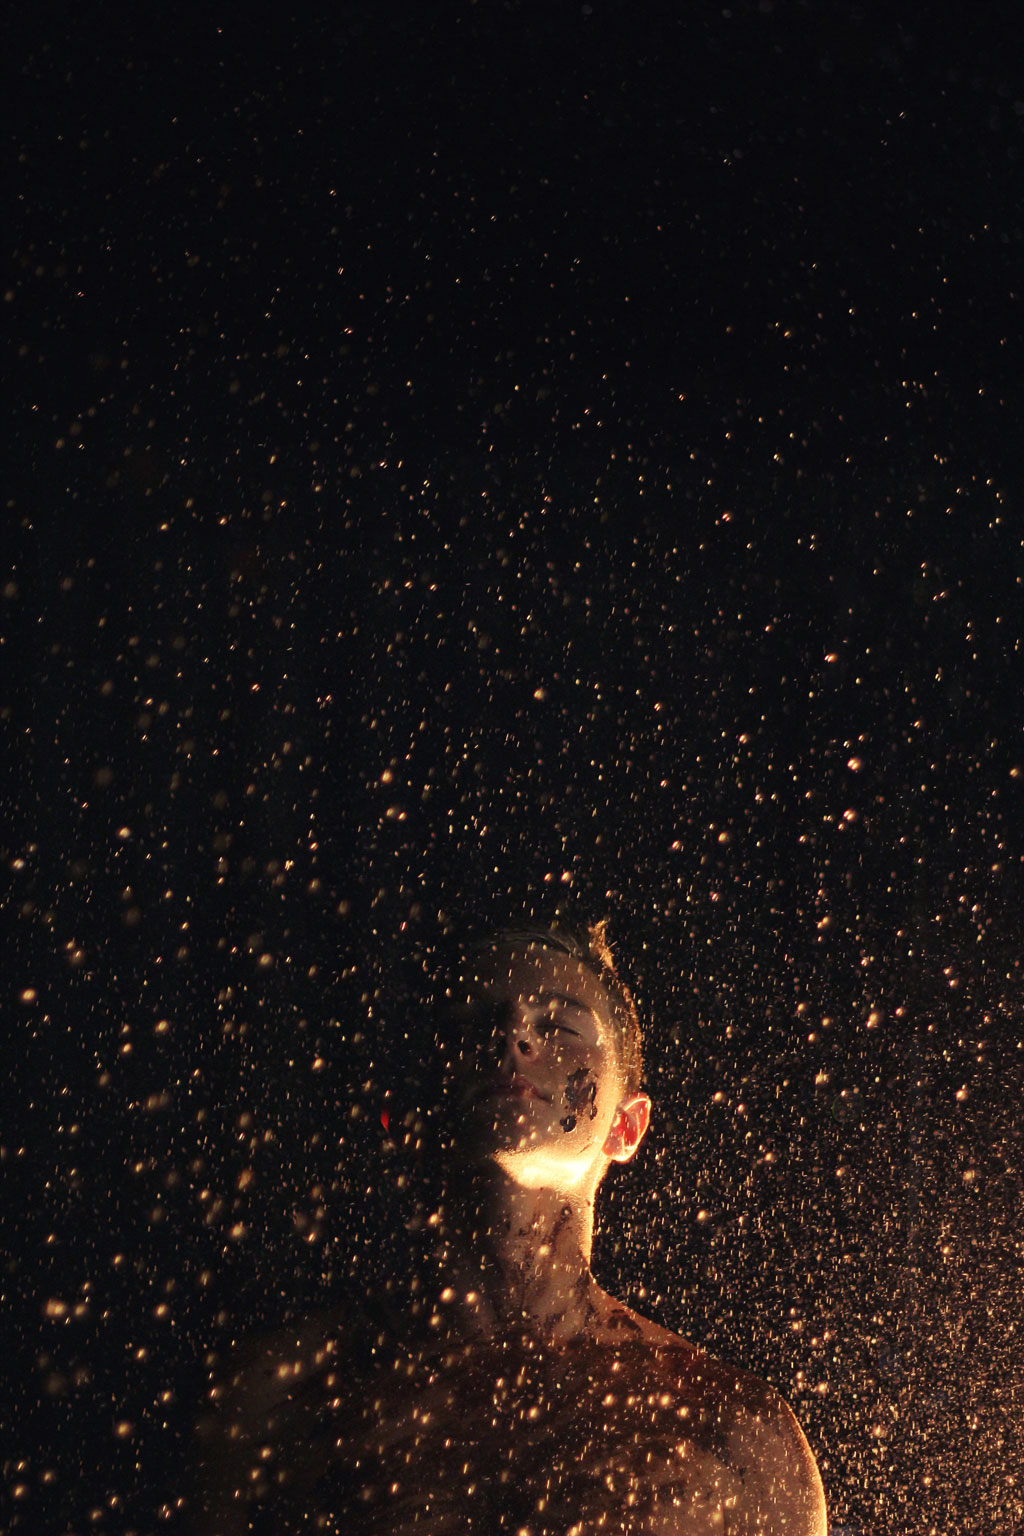 Night sky with fireflies and woman's head